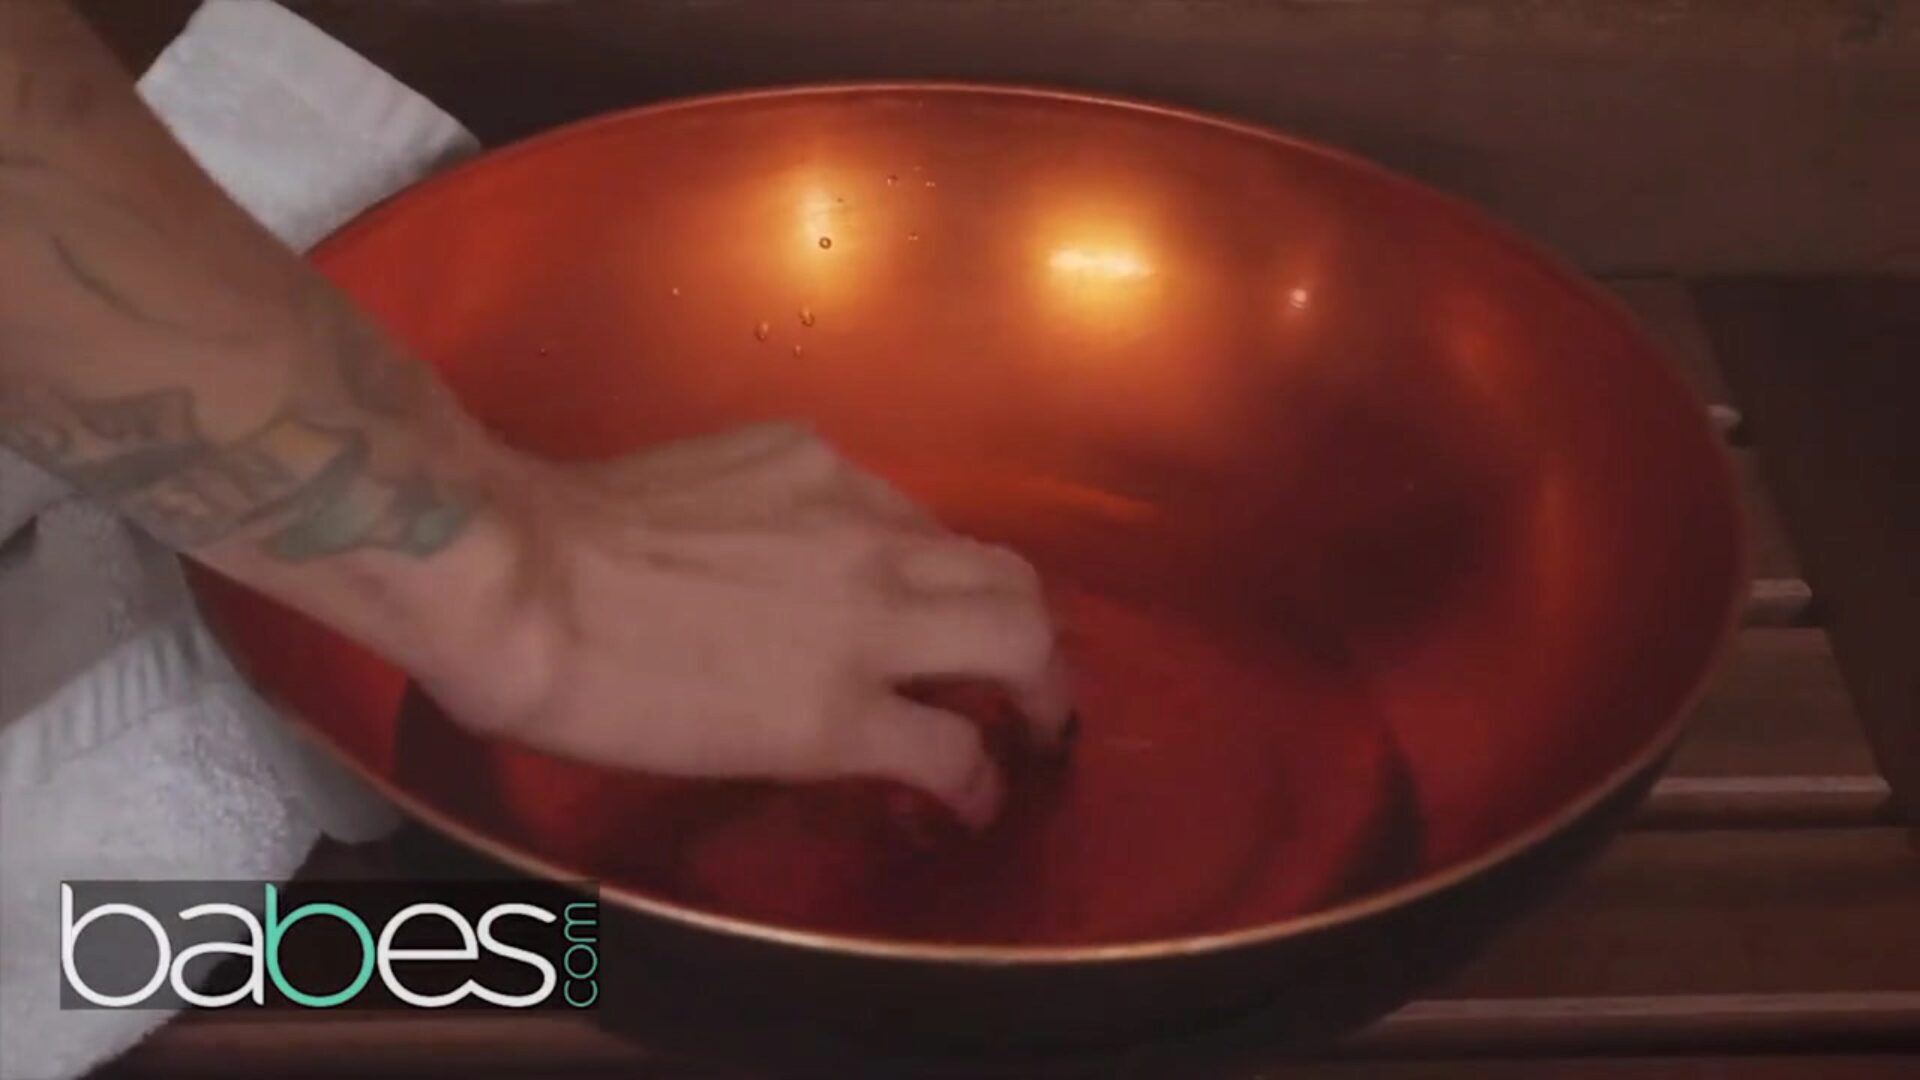 Babes- Big ass golden-haired adult movie star Jessa Rhodes gets rectal internal ejaculation in the Sauna